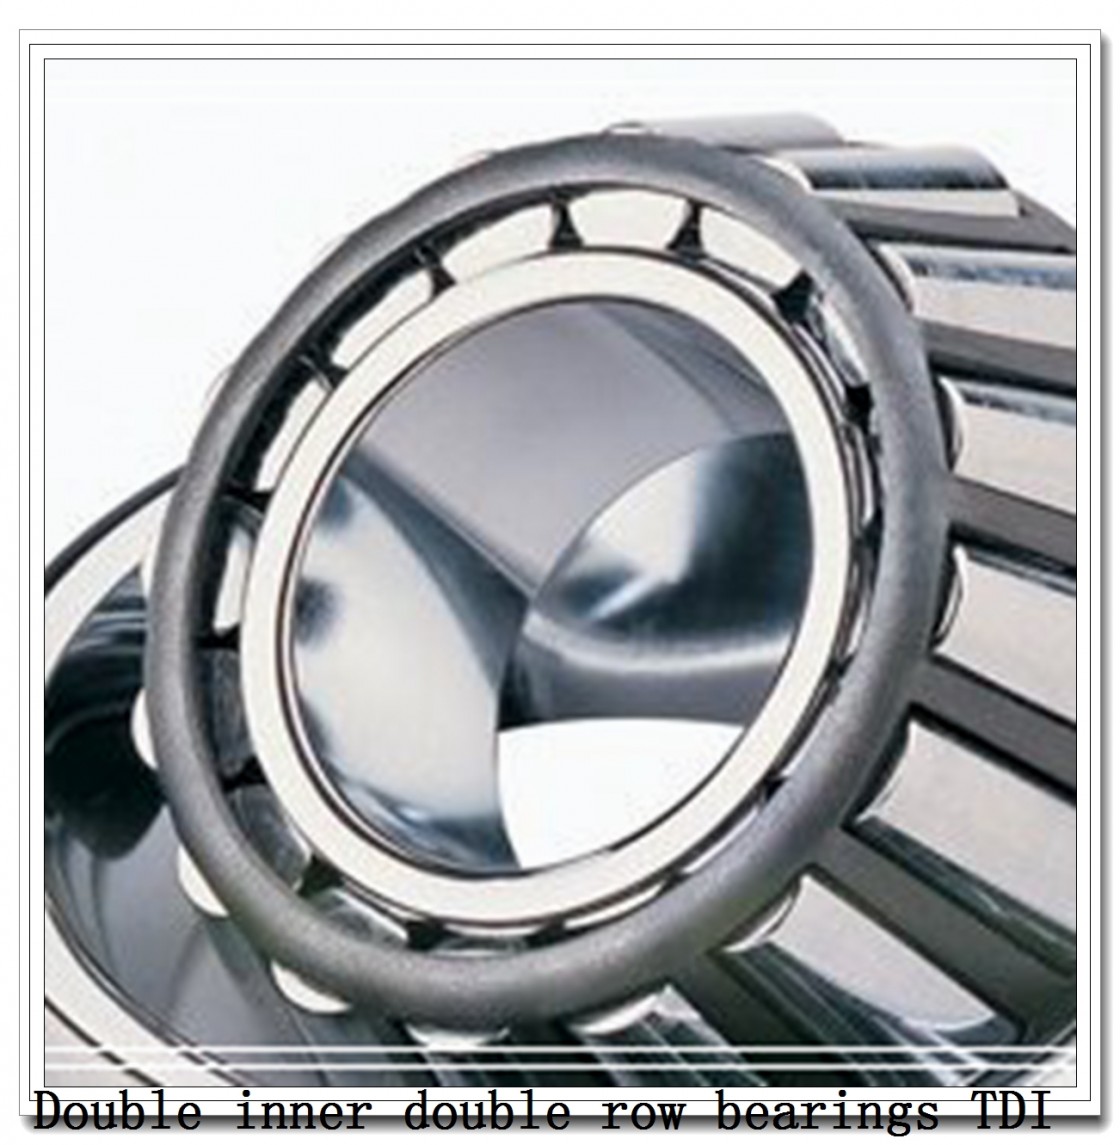 210TDO355-1 Double inner double row bearings TDI